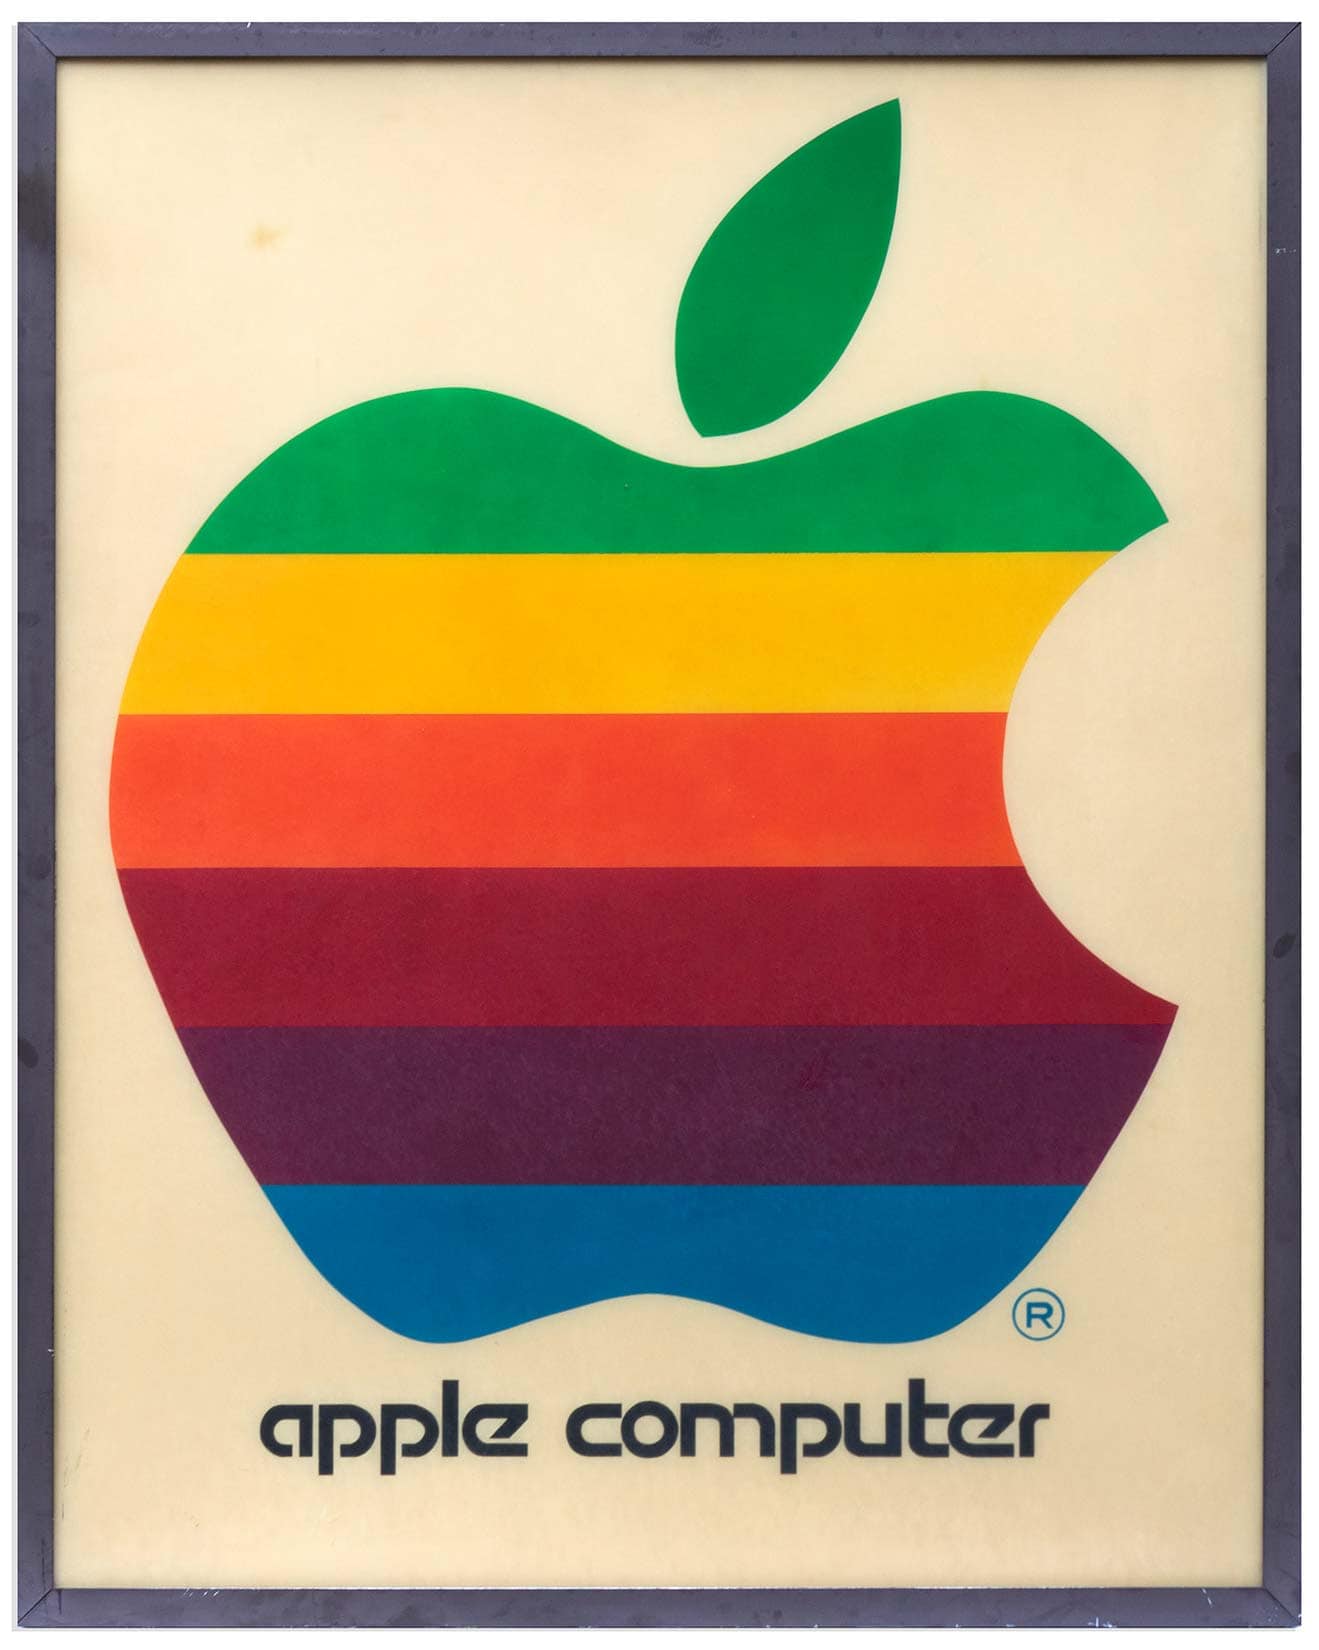 Vintage apple apple a1260 macbook pro